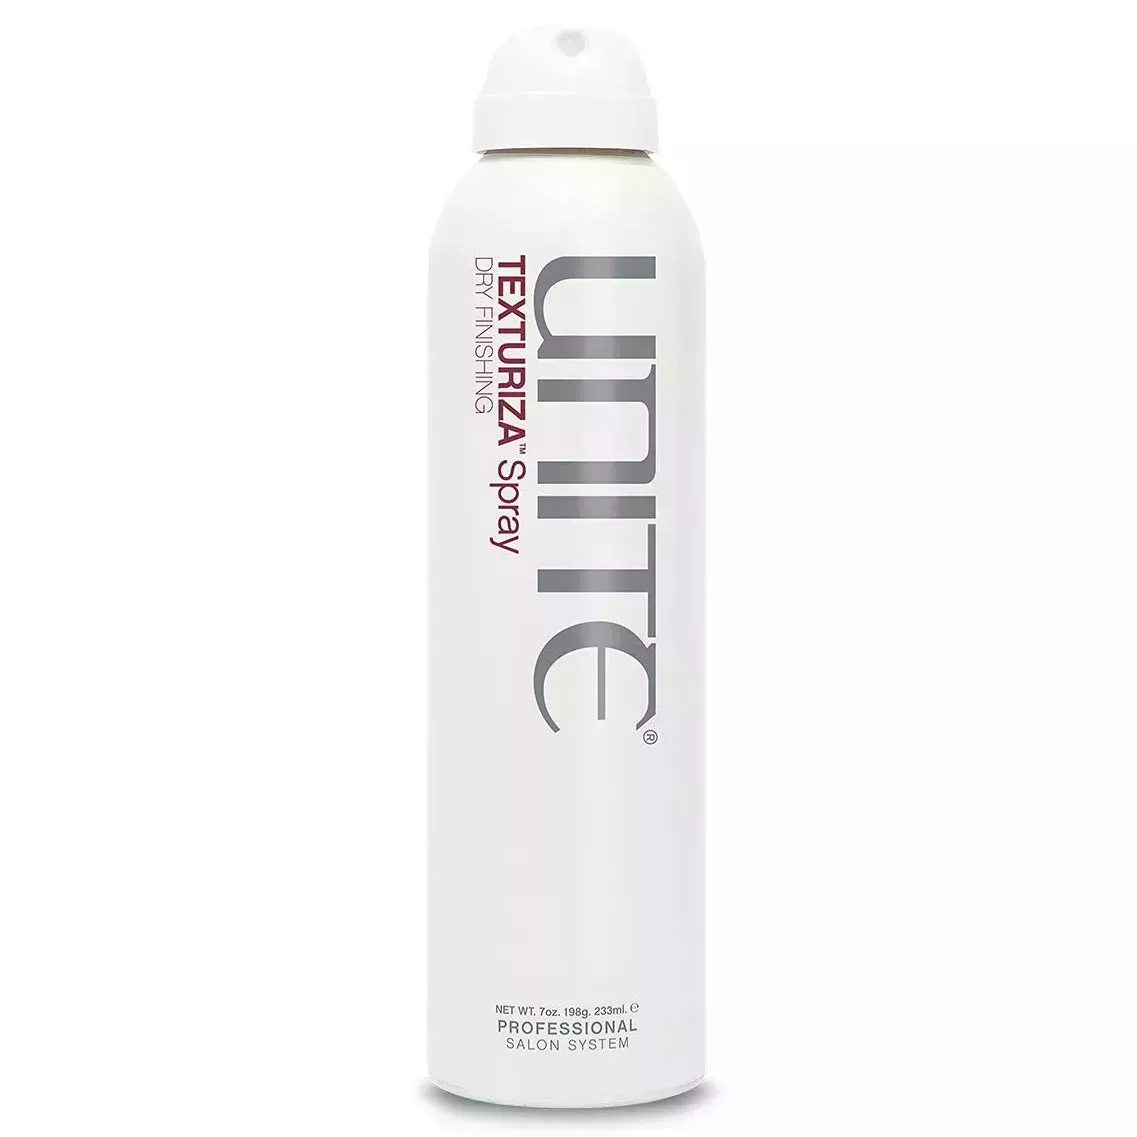 Unite Hair Texturiza Spray white spray canister on white background